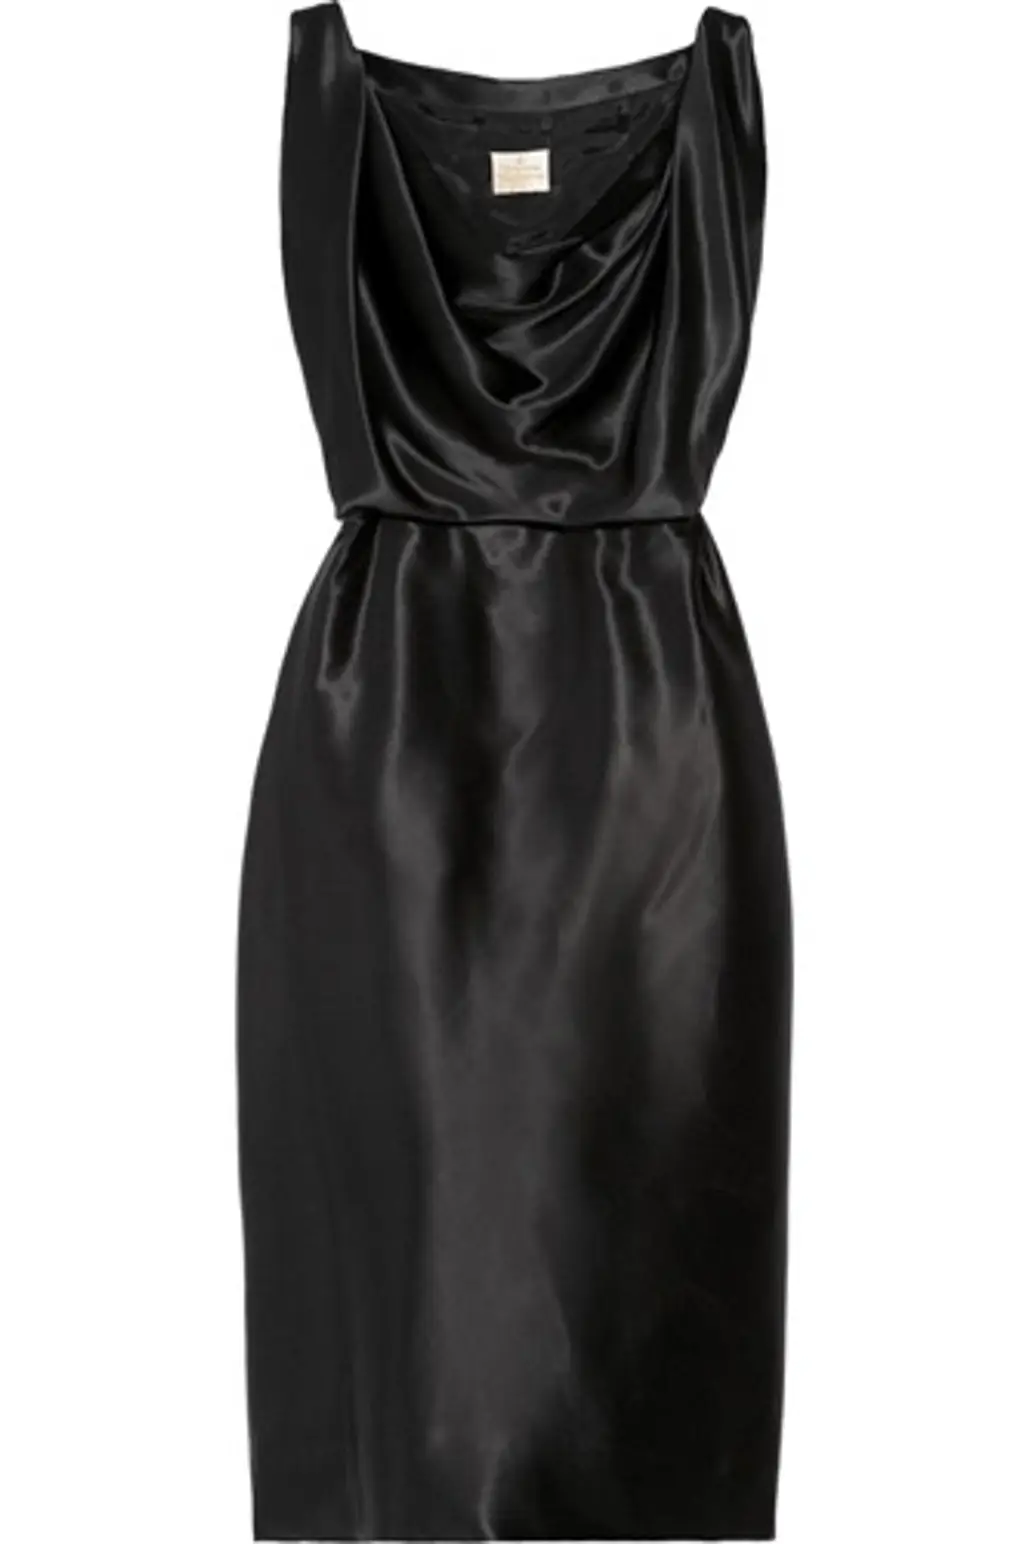 Vivienne Westwood Gold Label Silk-Satin Dress